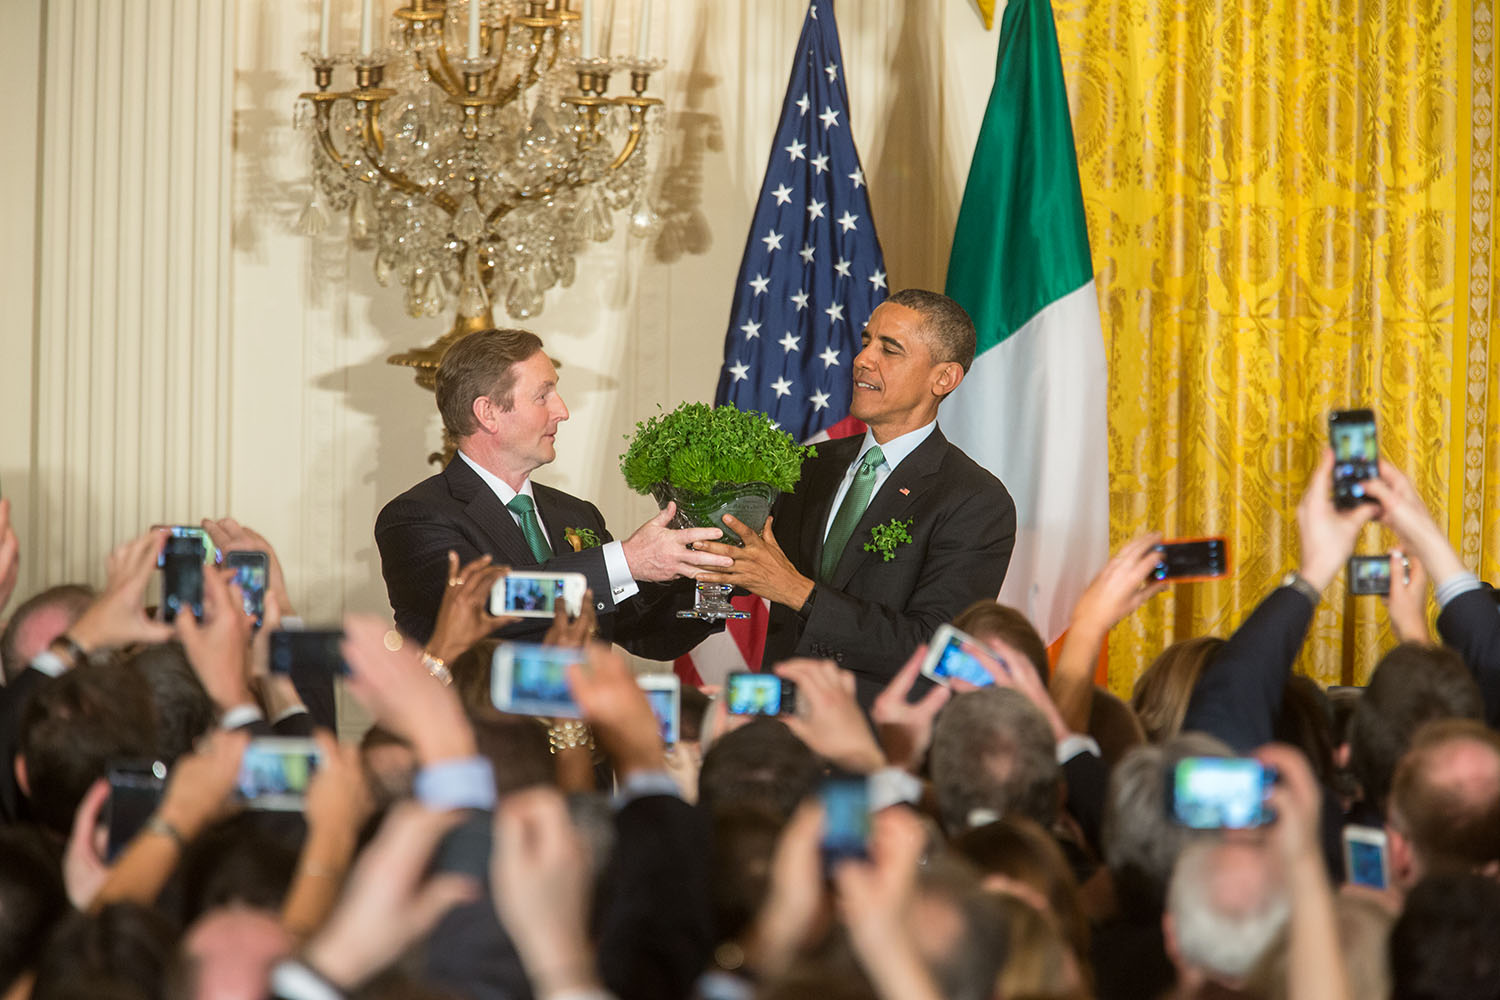 Prime Minister Enda Kenny presents a shamrock bowl to President Barack Obama